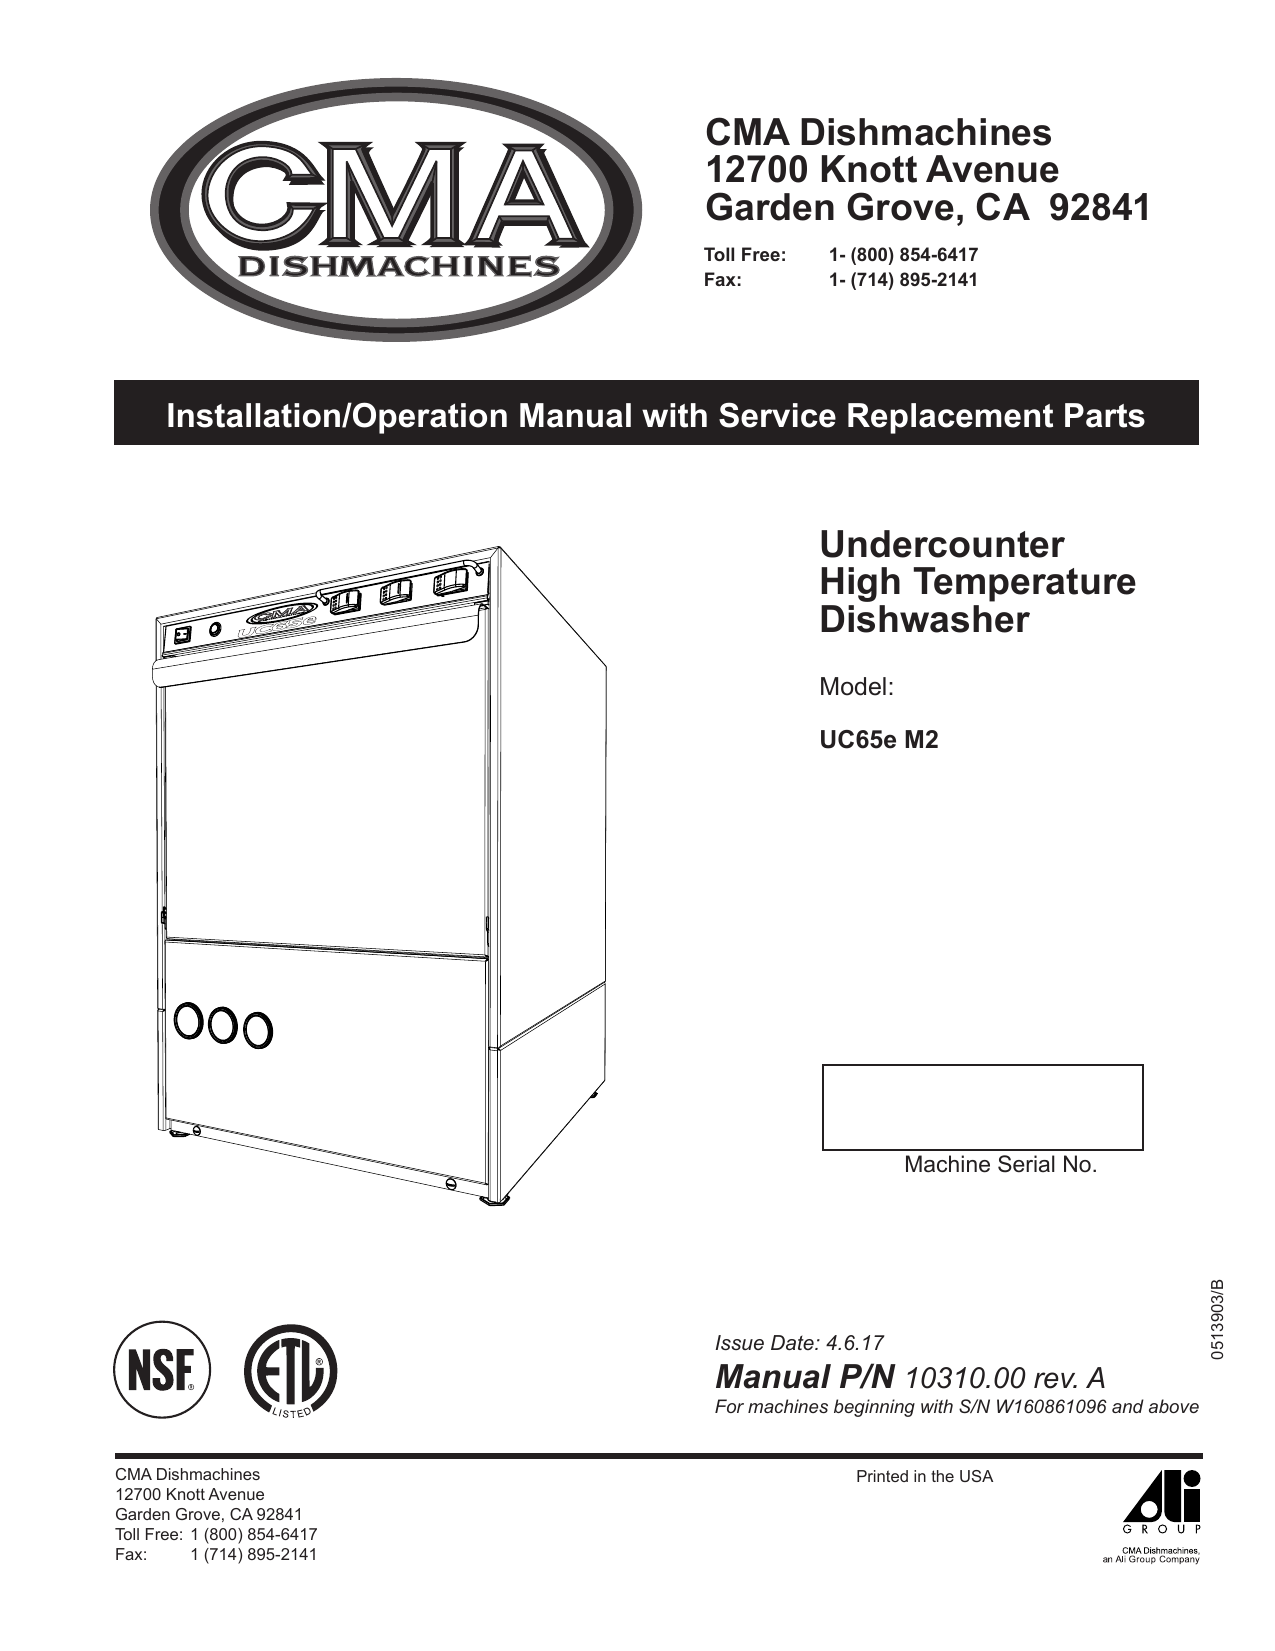 Undercounter High Temperature Dishwasher Cma Dishmachines Manualzz